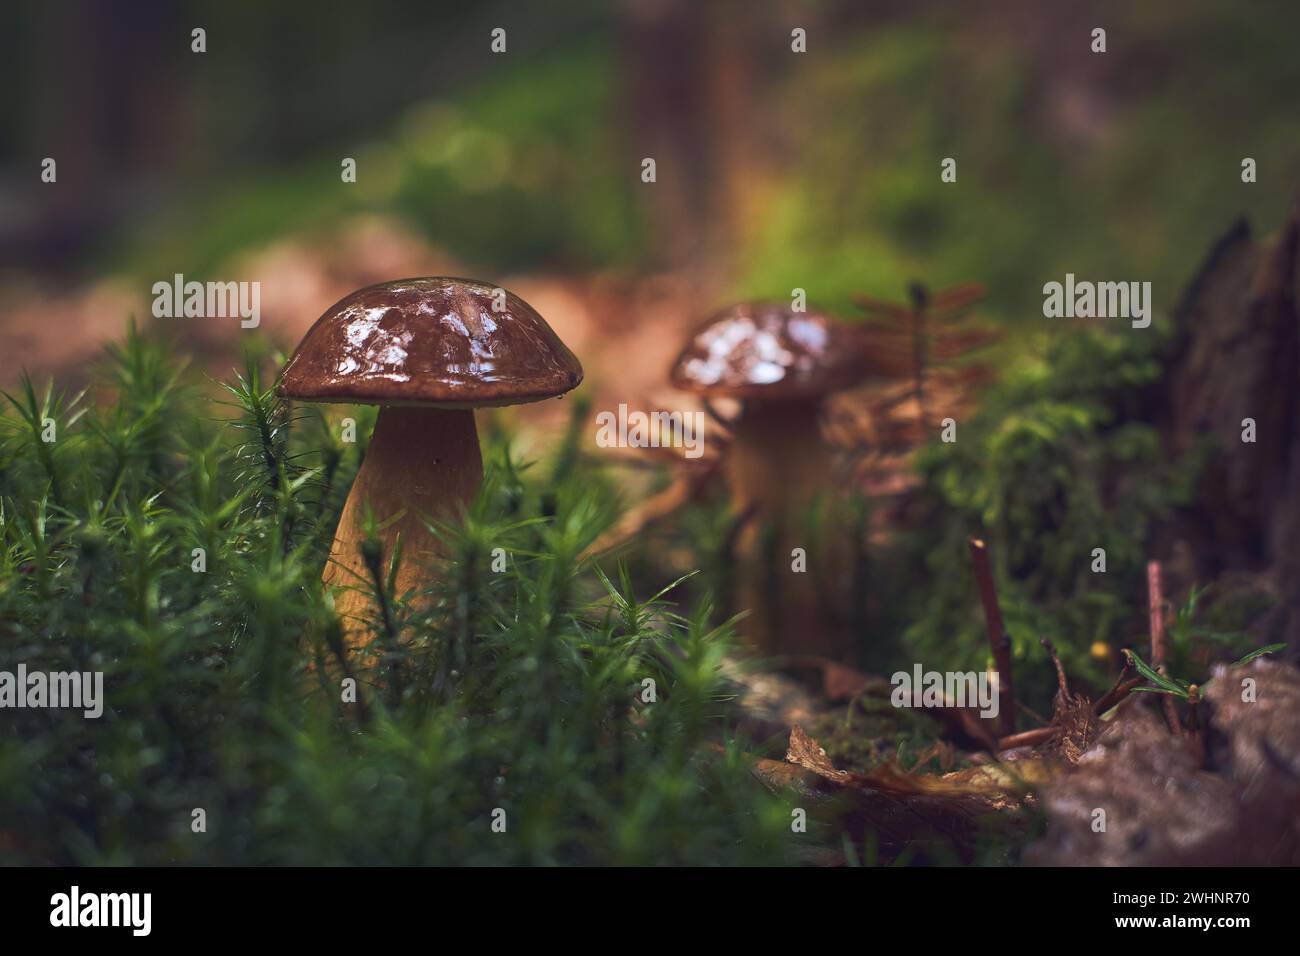 Chestnut Mushroom on mossy forest ground Stock Photo